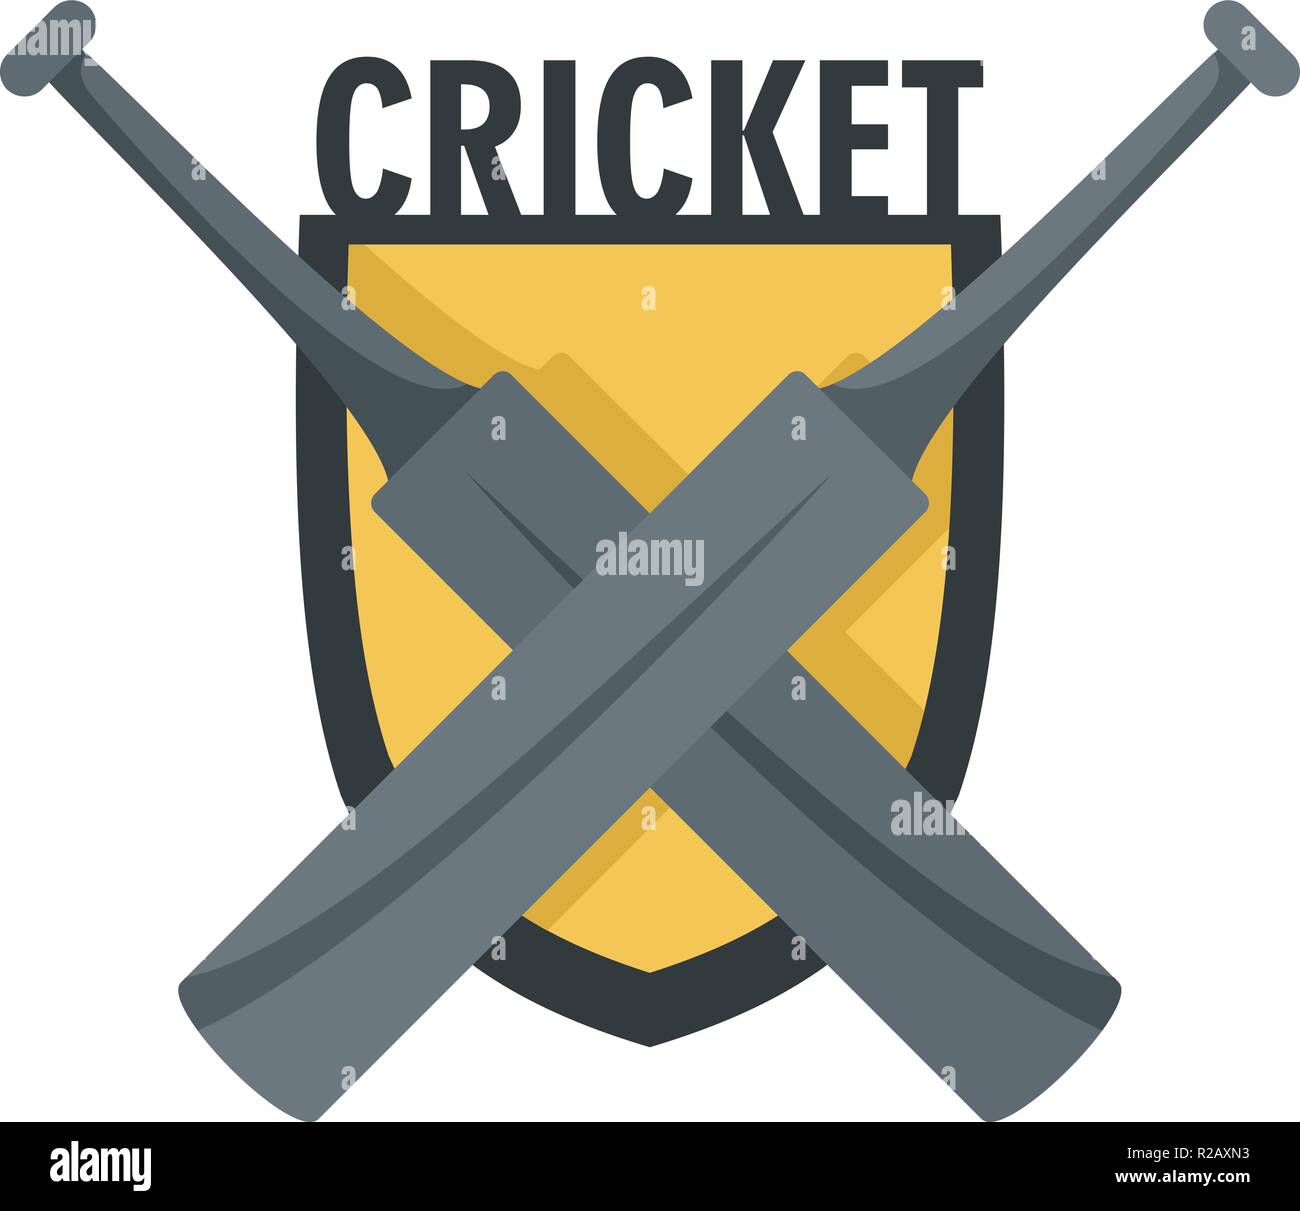 Cricket crossed bats logo